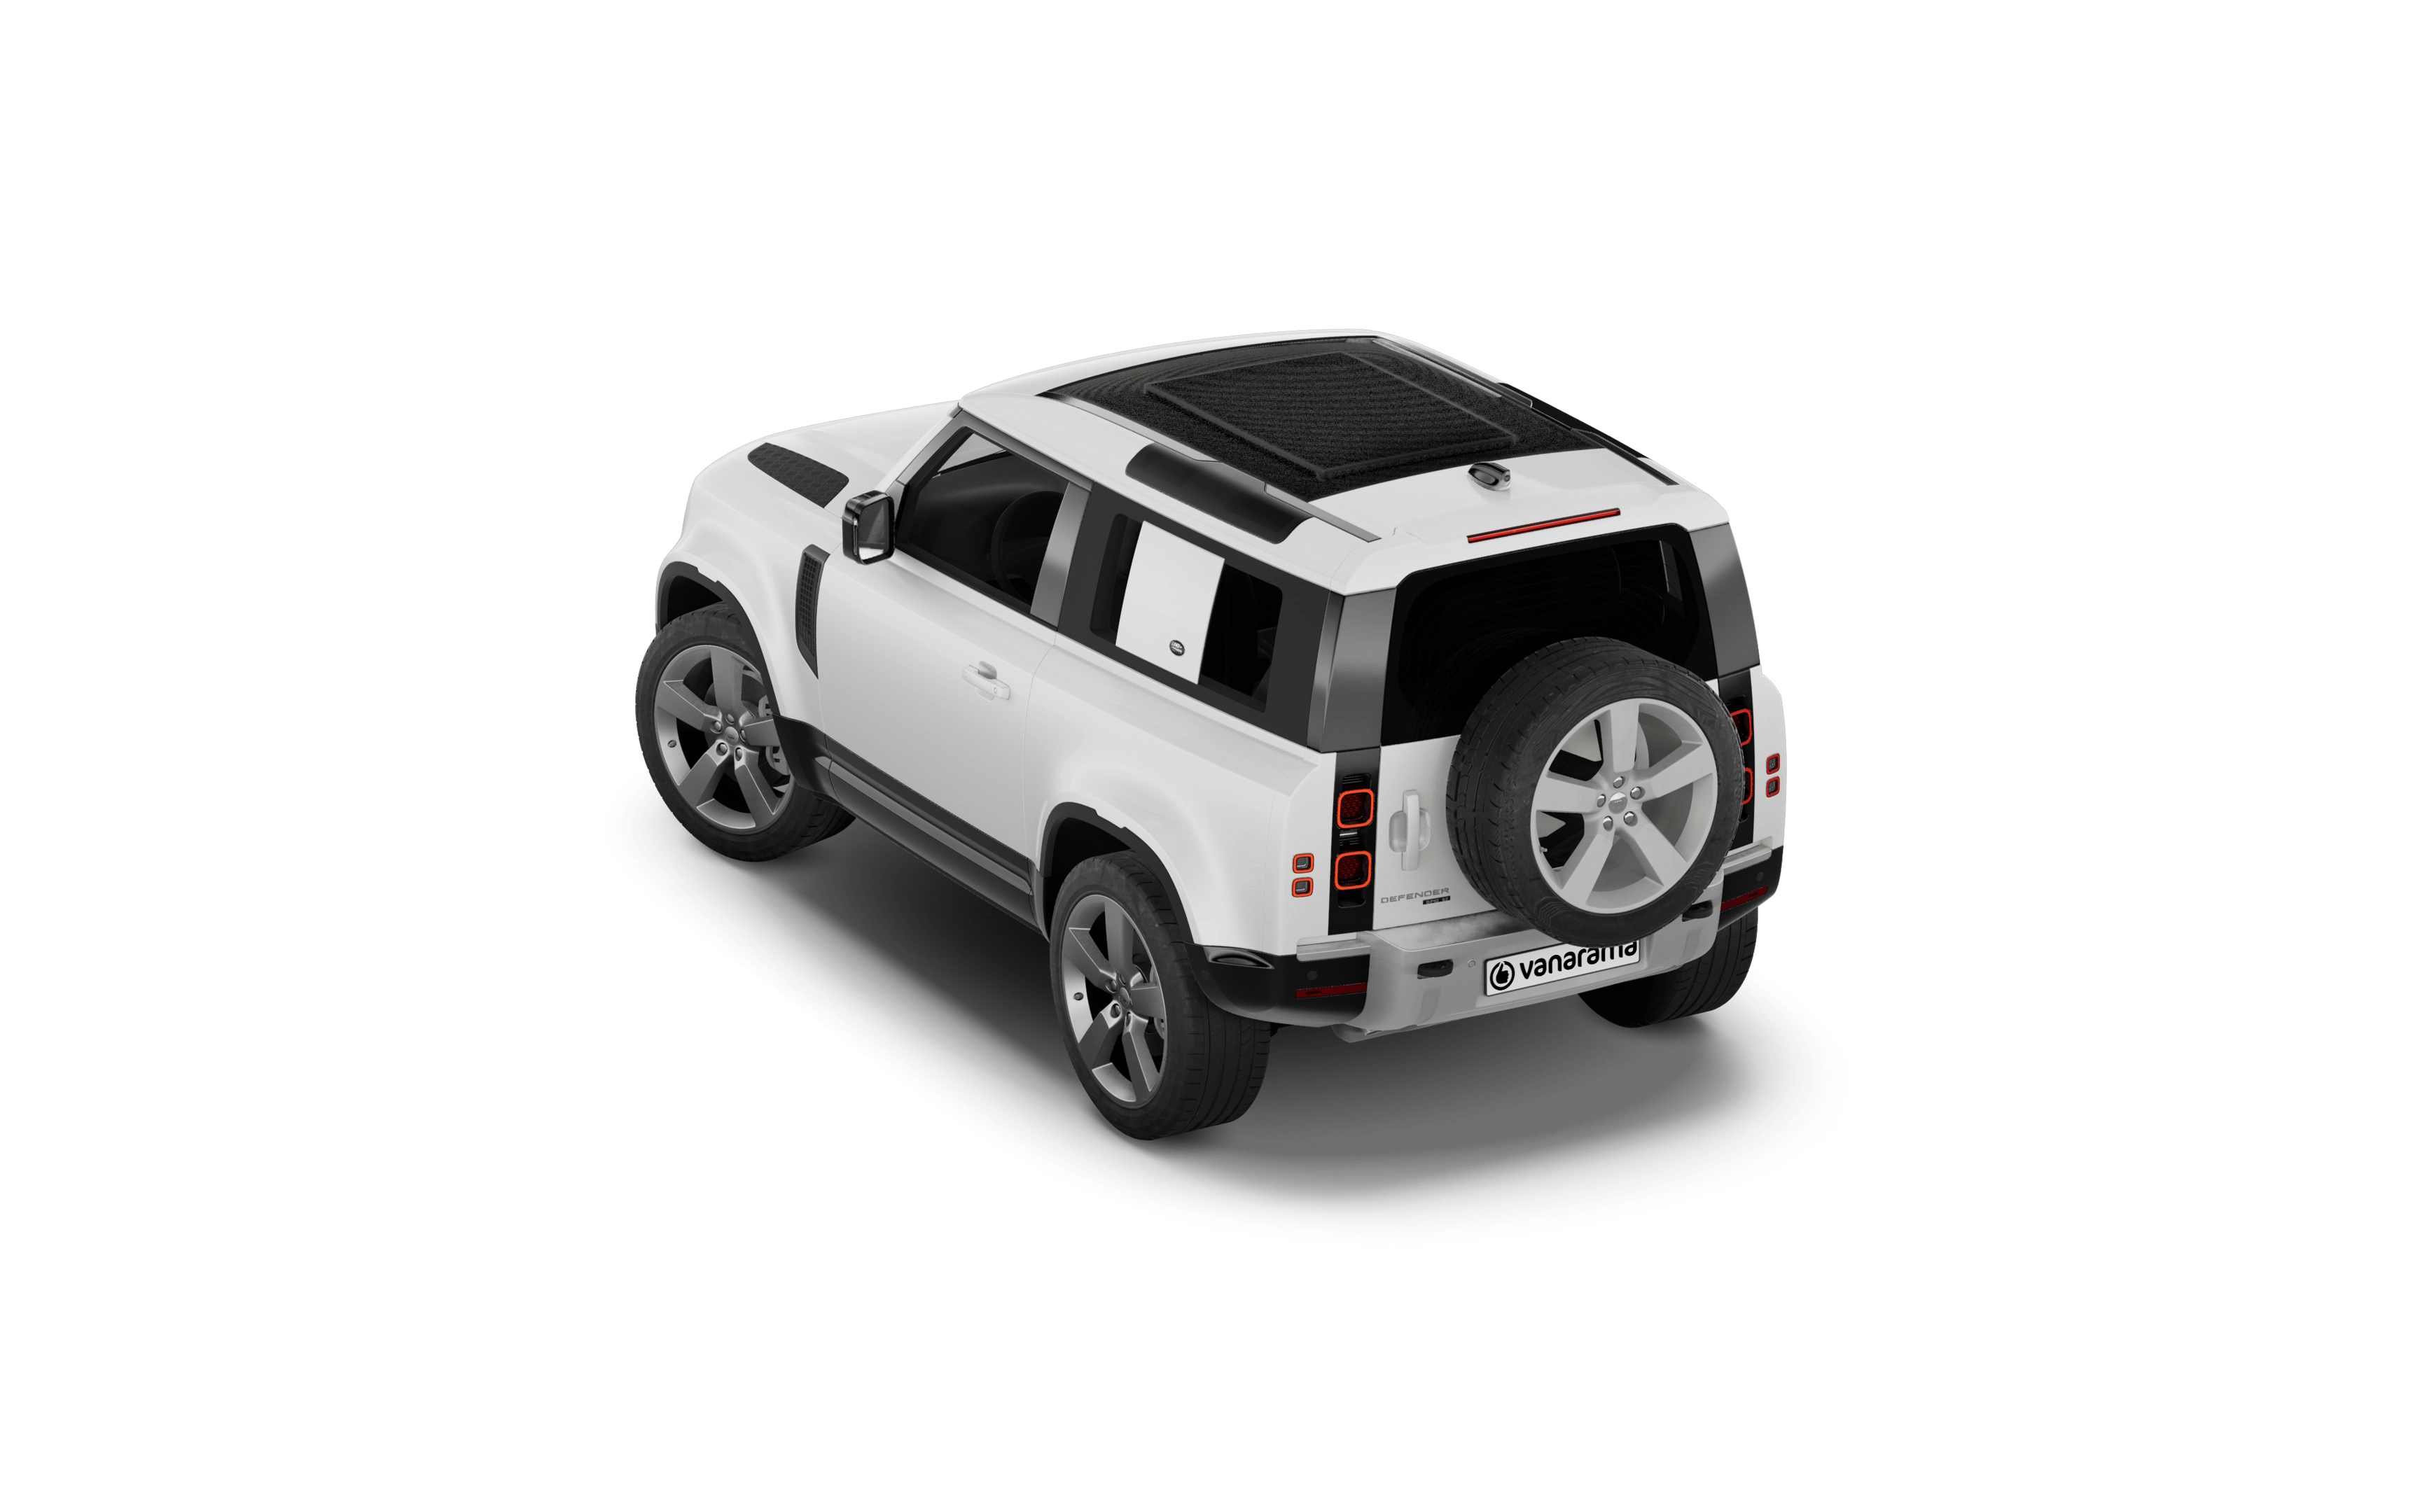 Land rover defender estate 3.0 d300 x-dynamic hse 110 5 doors auto [7 seat]